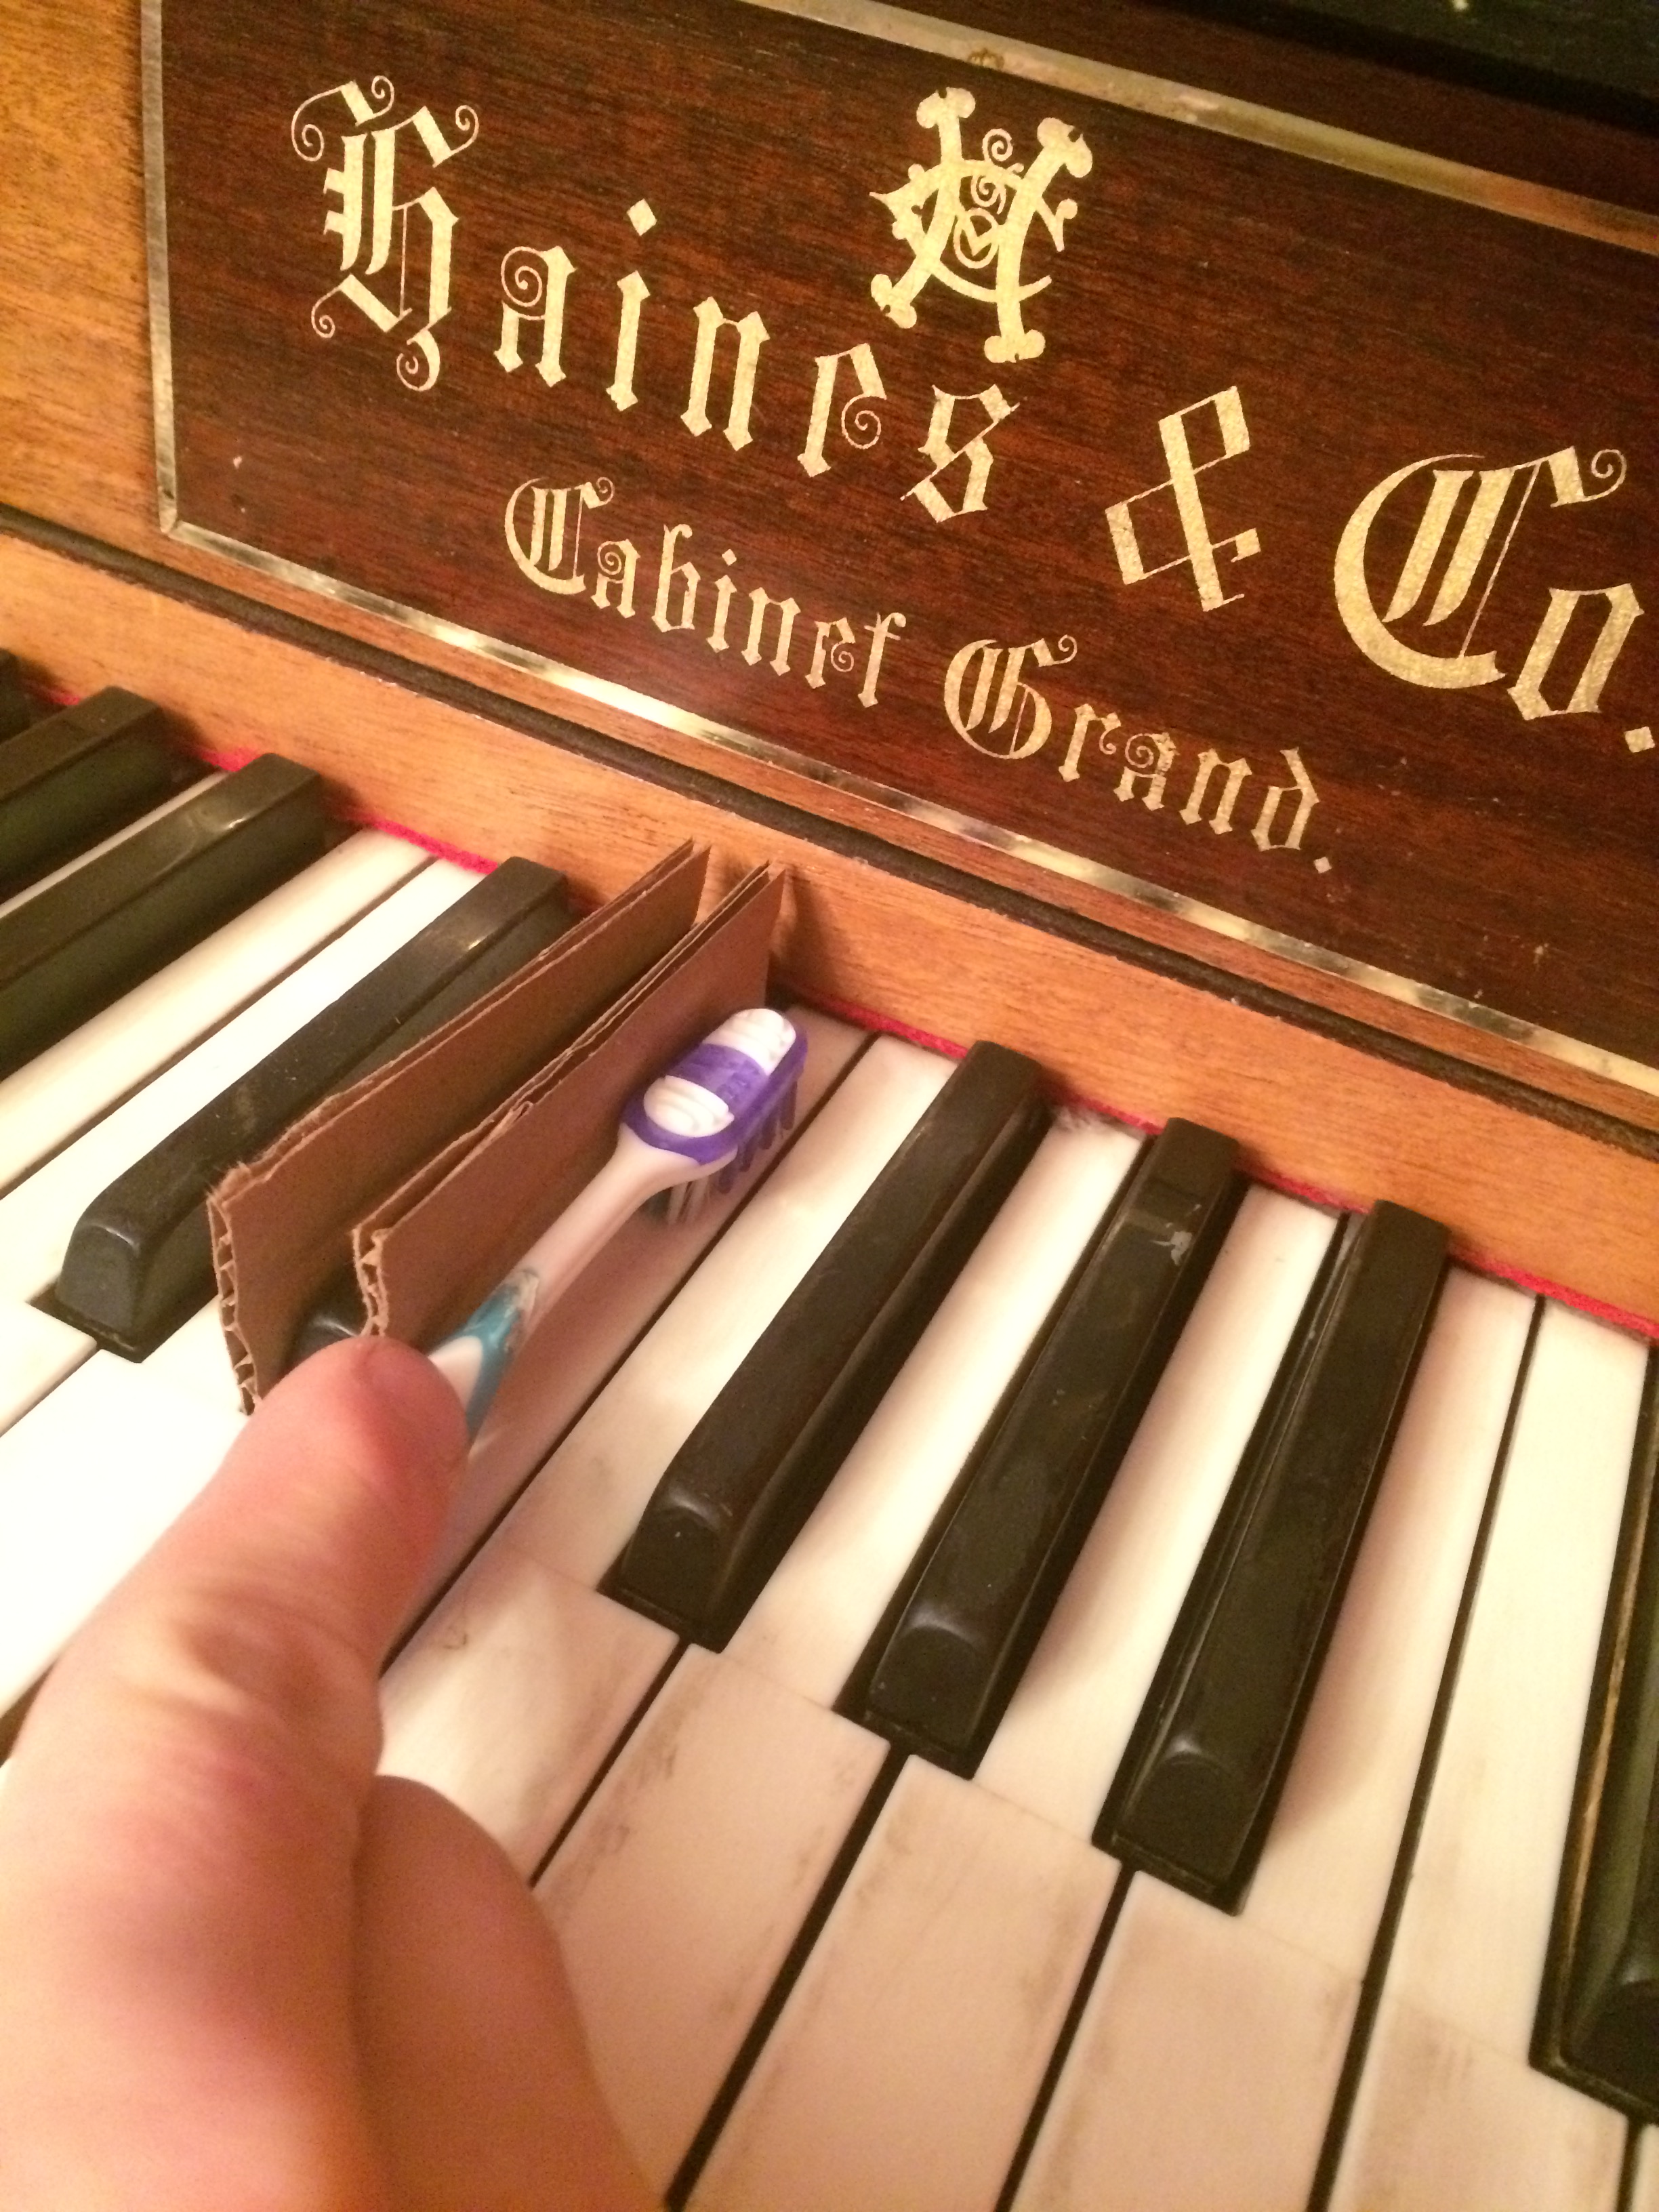 Cleaning Piano Keys | An Amazing Machine